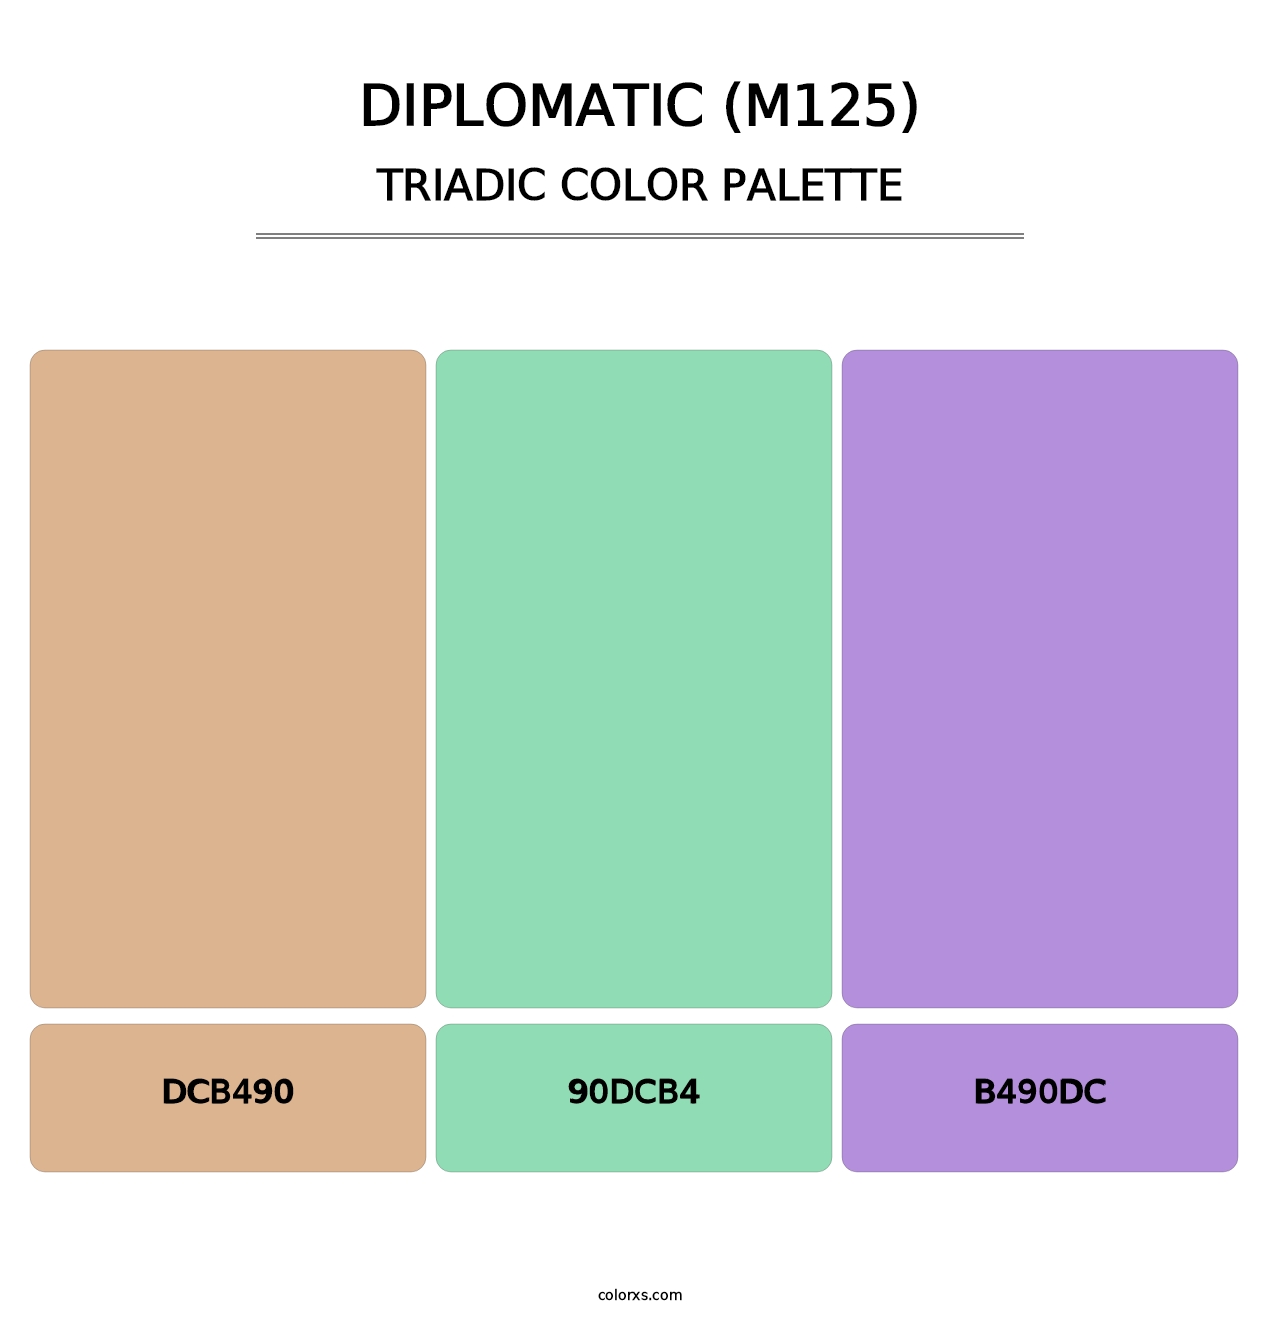 Diplomatic (M125) - Triadic Color Palette